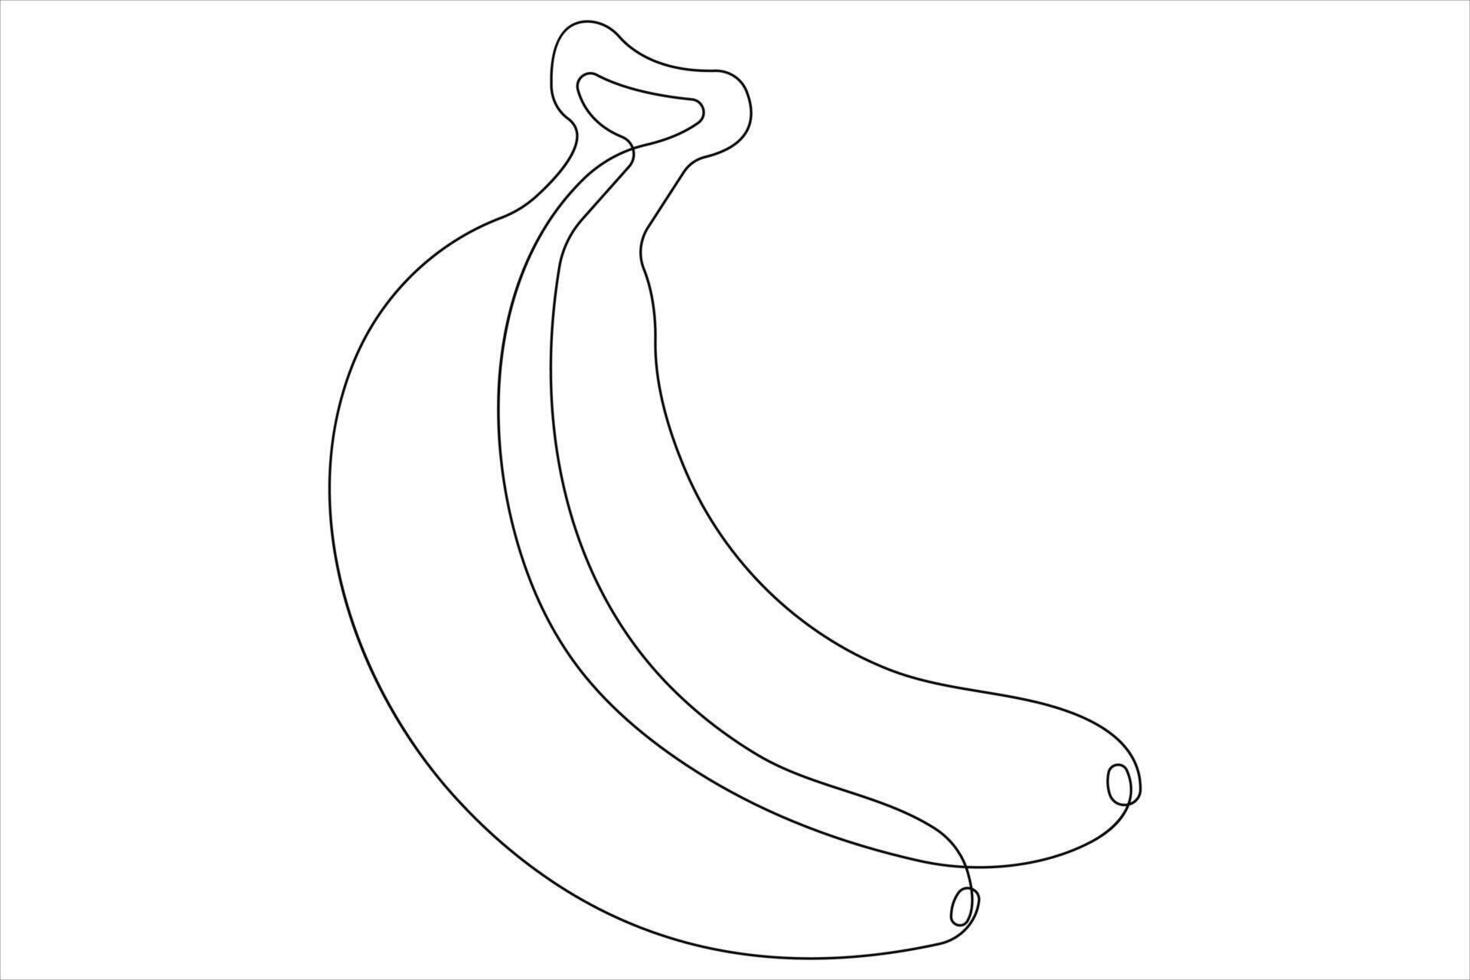 illustration av banan kontinuerlig ett linje konst teckning begrepp vektor